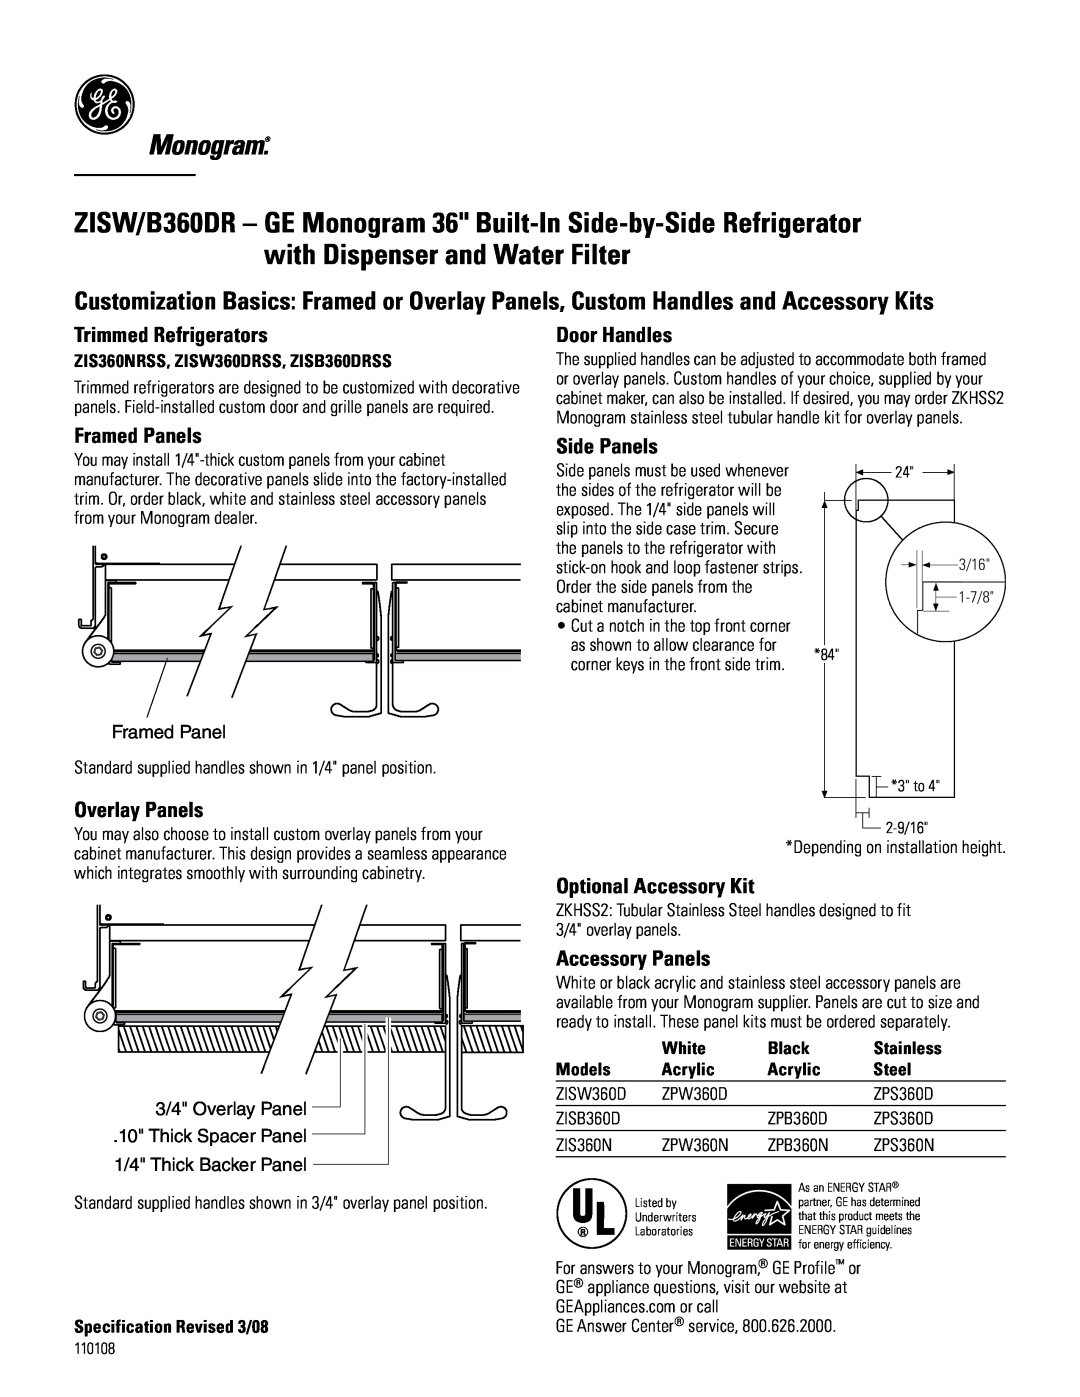 GE ZISW/B360DR Trimmed Refrigerators, Framed Panels, Overlay Panels, Door Handles, Side Panels, Optional Accessory Kit 